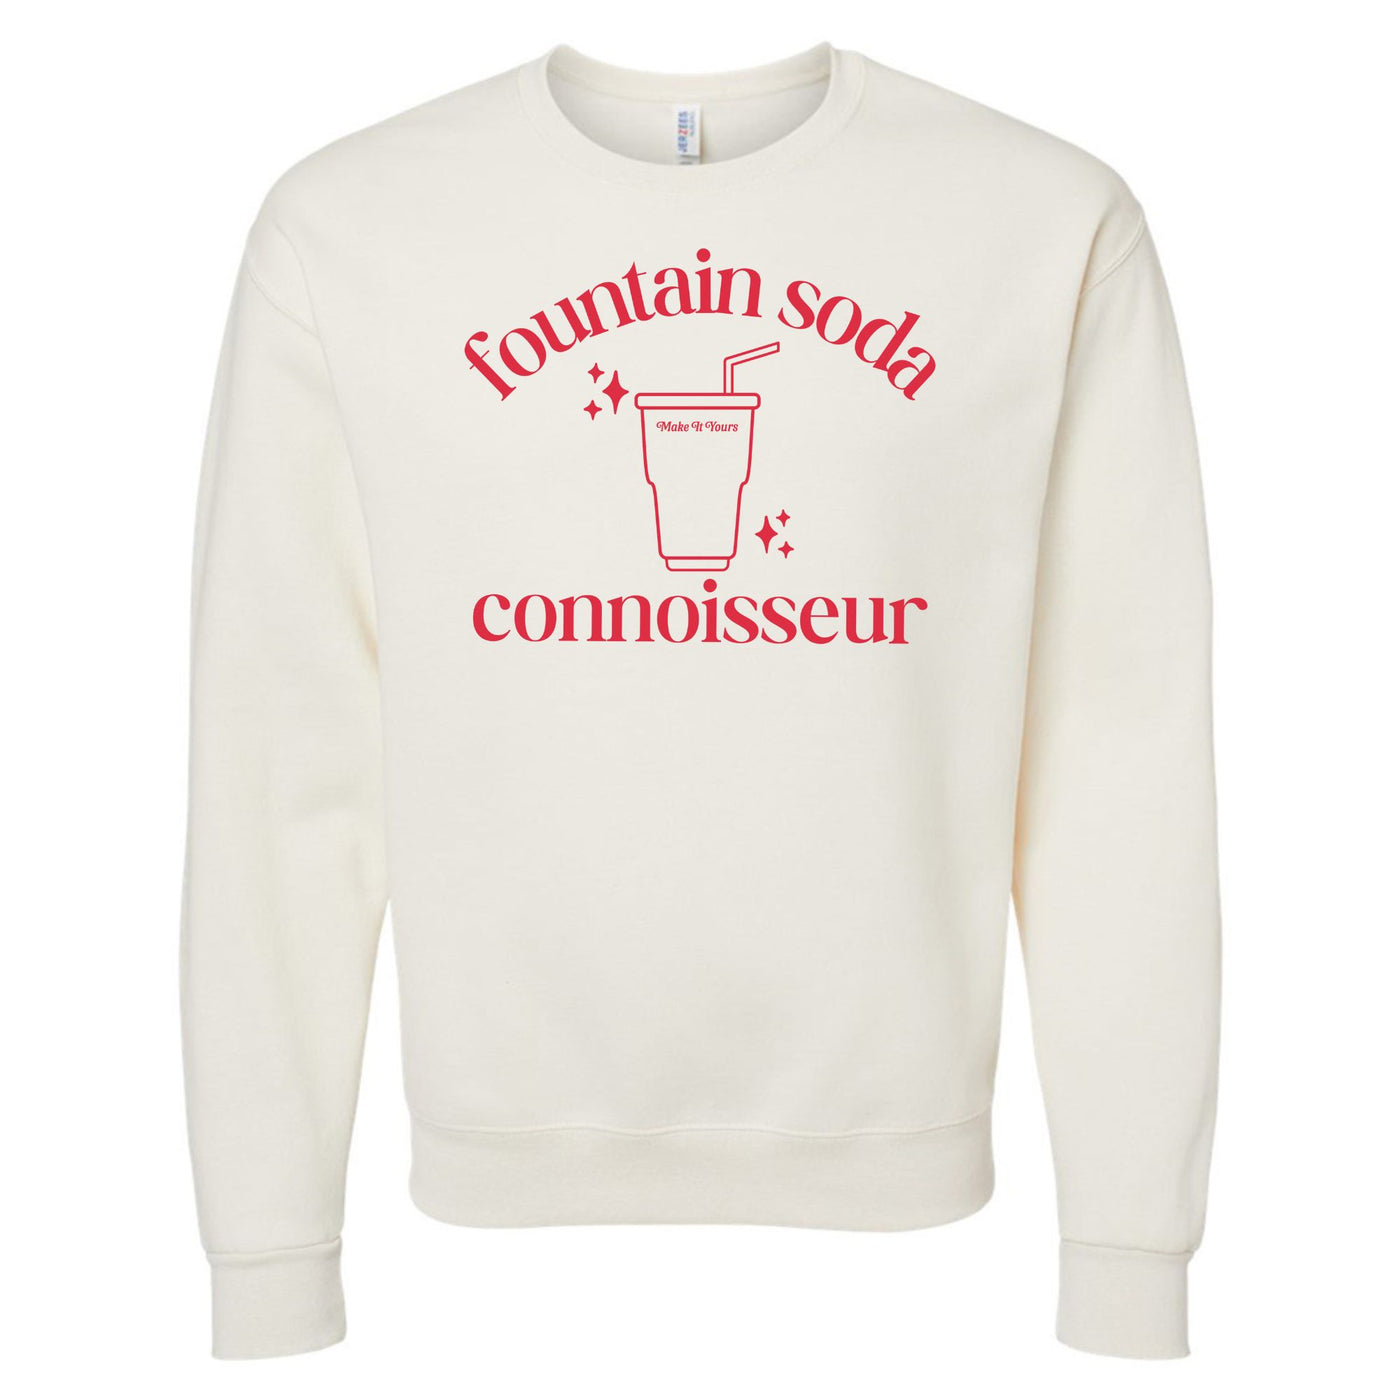 Make It Yours™ 'Fountain Soda Connoisseur' Crewneck Sweatshirt